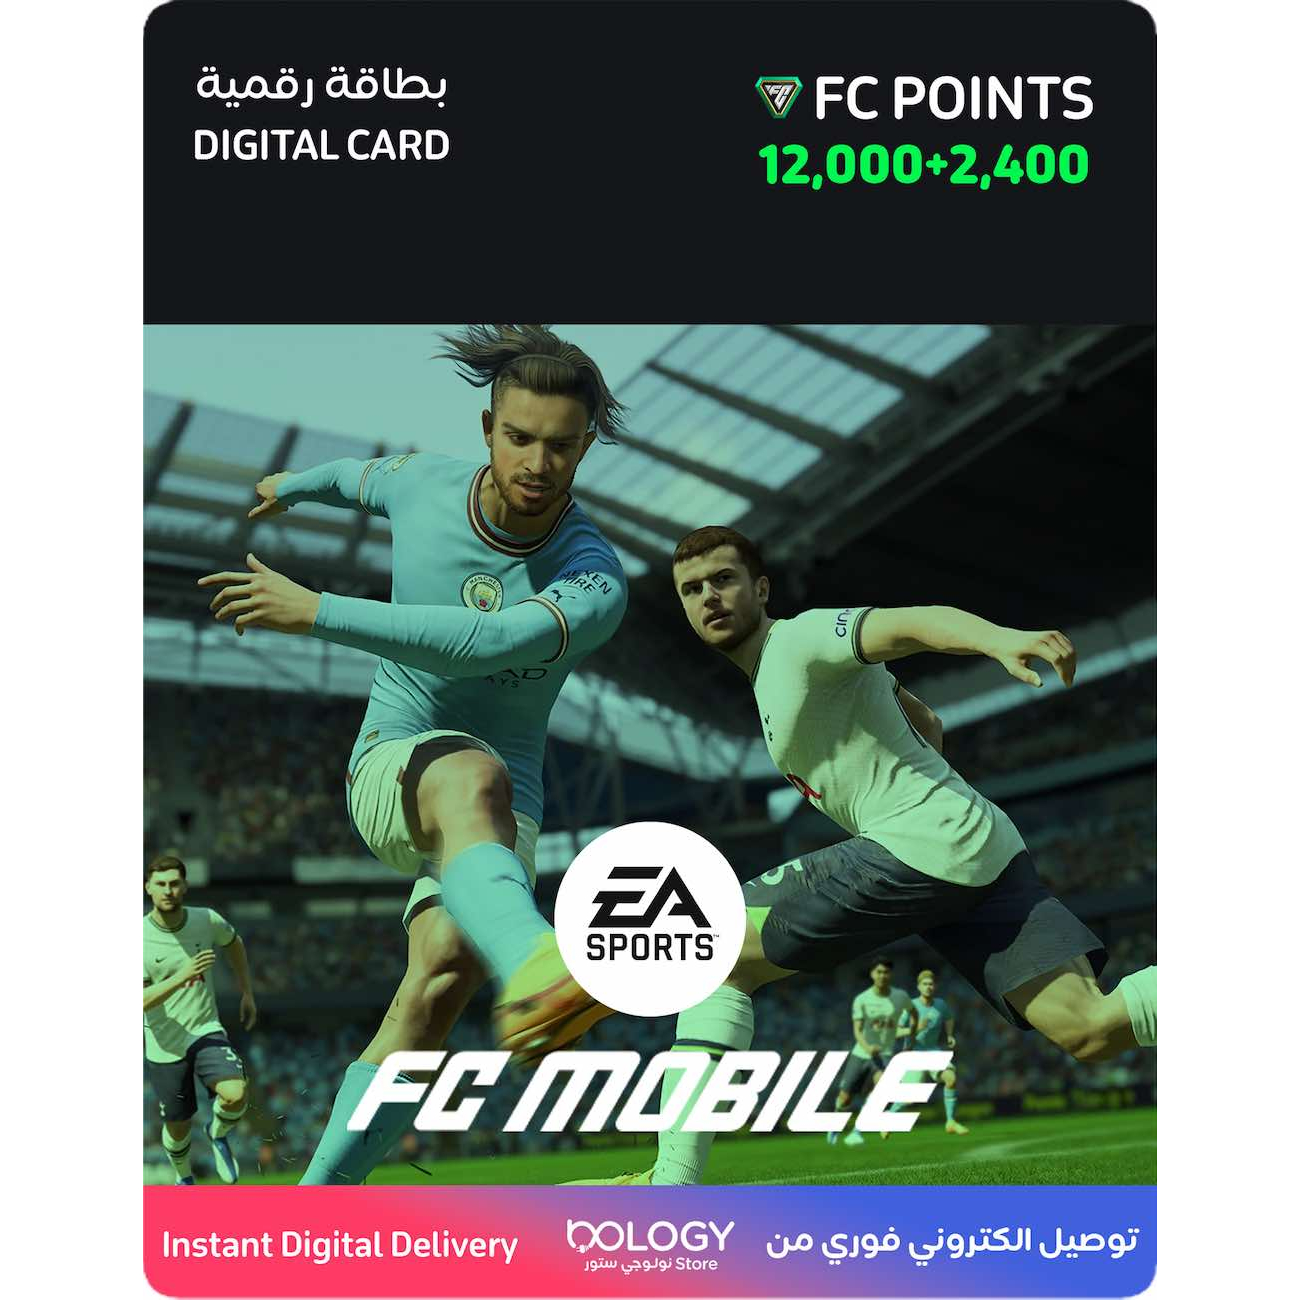 EA Sports FC Mobile Game Points / 5750 + 1150 Points / Digital